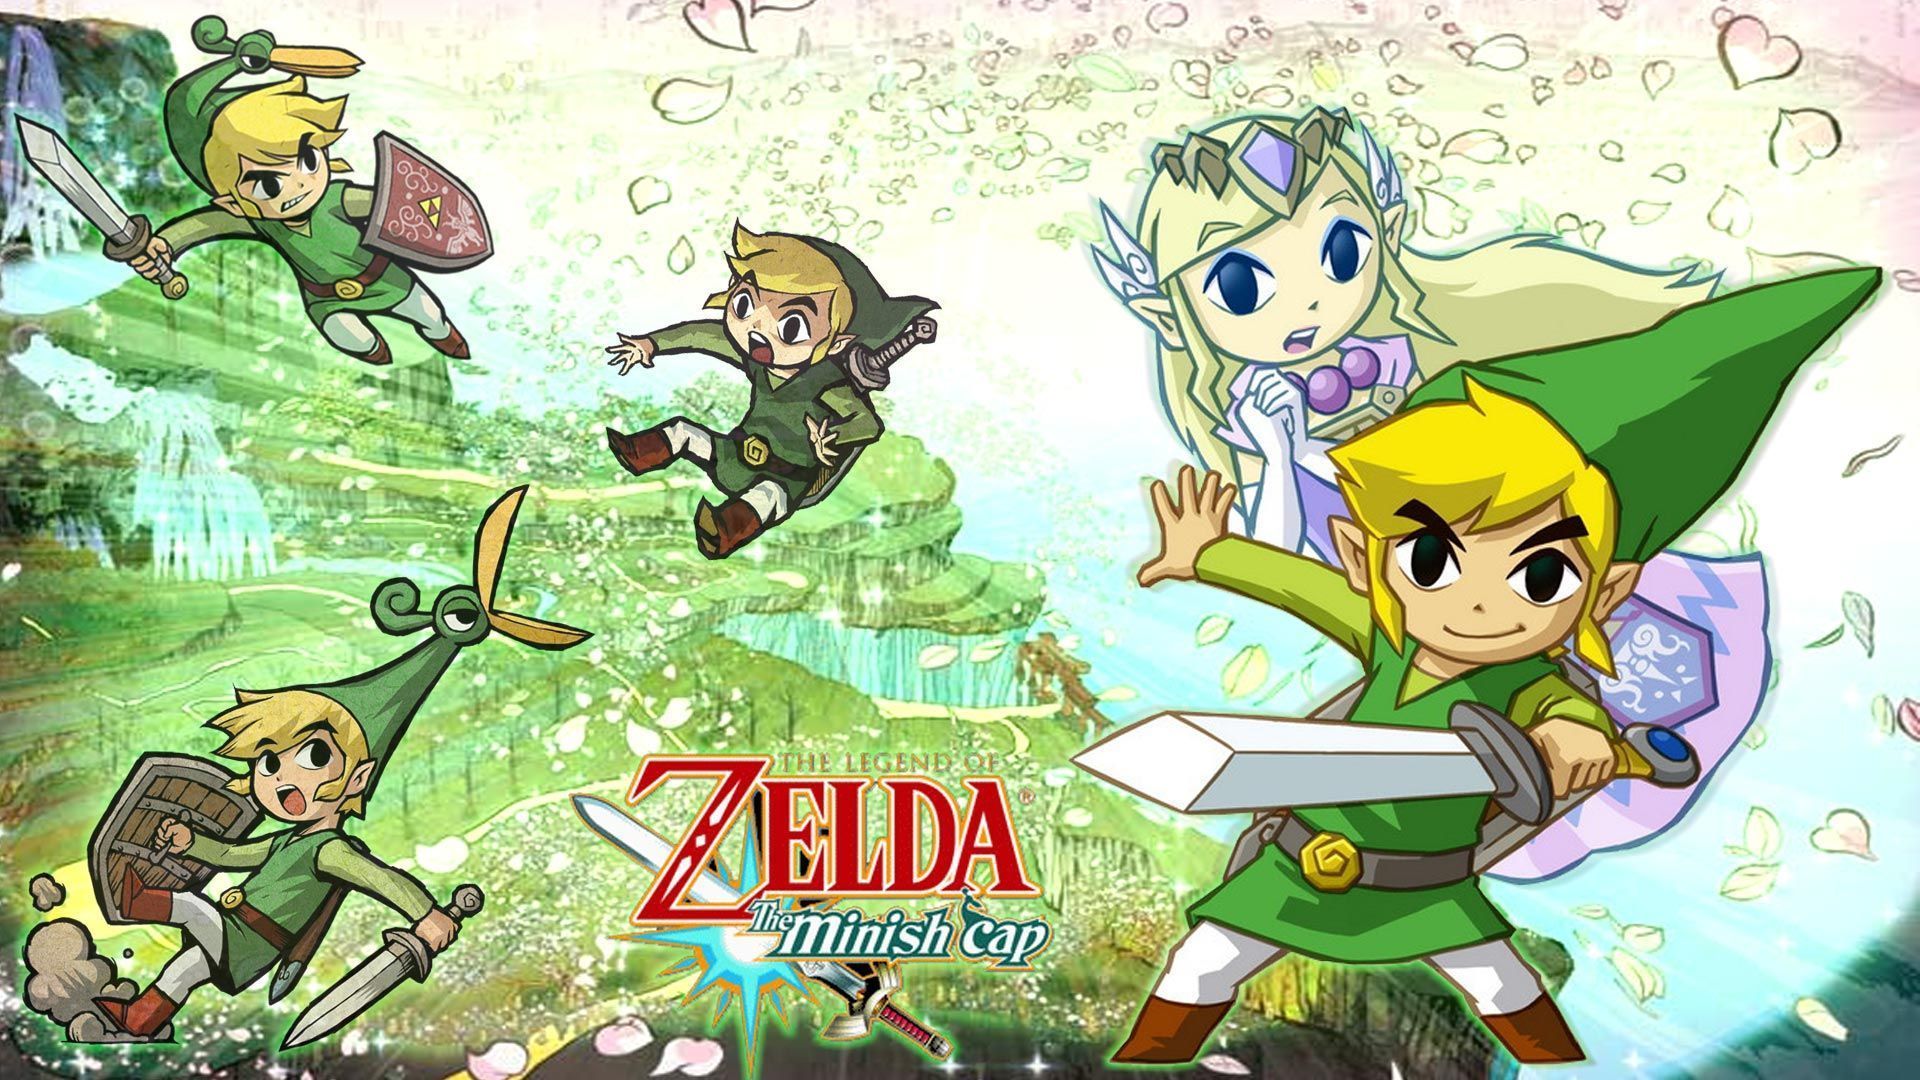 HD Quality The Legend of Zelda Wallpaper Widescreen 14 Game ...